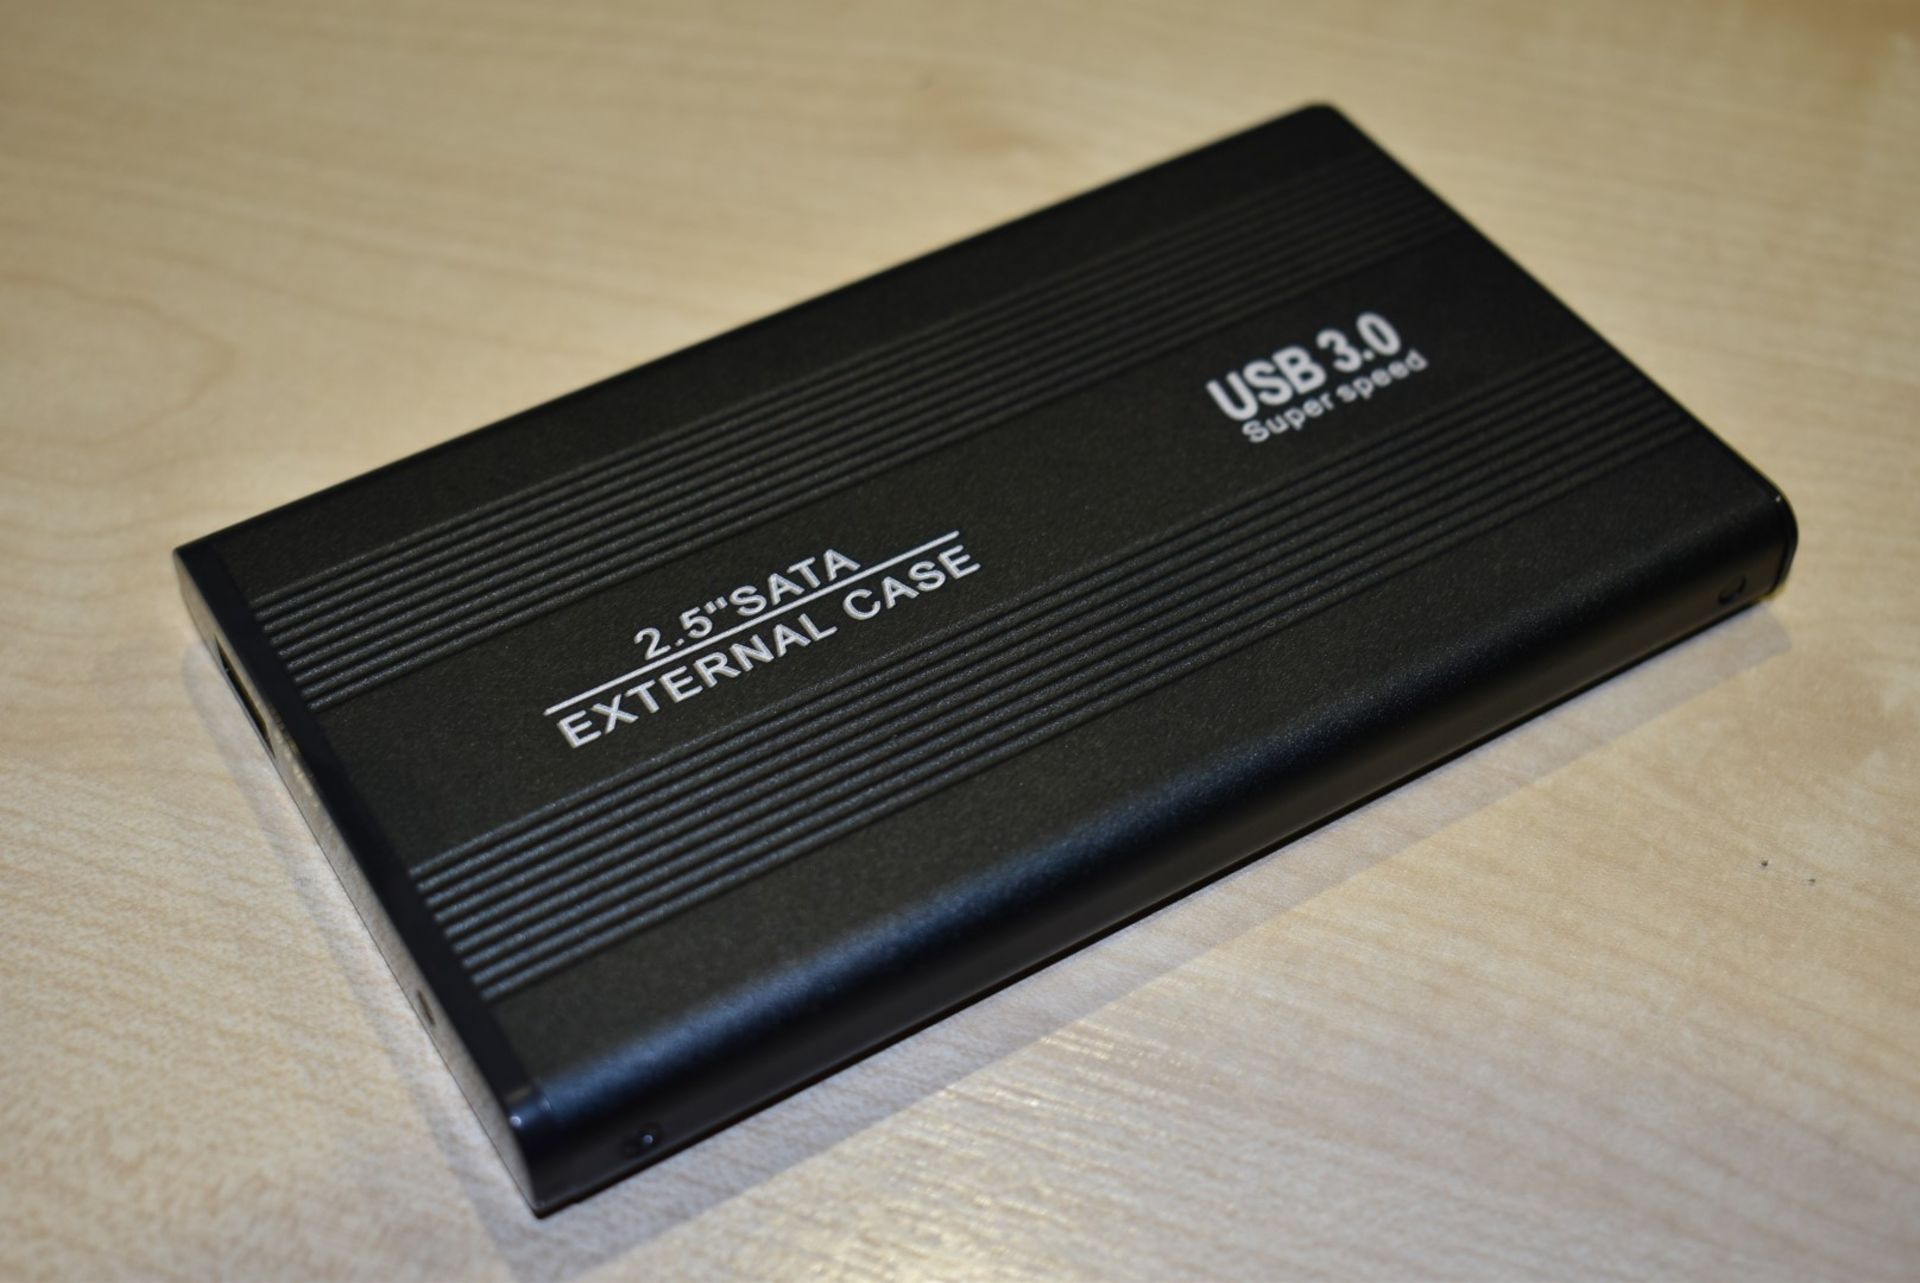 1 x External 500gb Hard Drive - Fast USB 3.0 External Drive With Aluminum Case, Carry Pouch and - Bild 3 aus 4